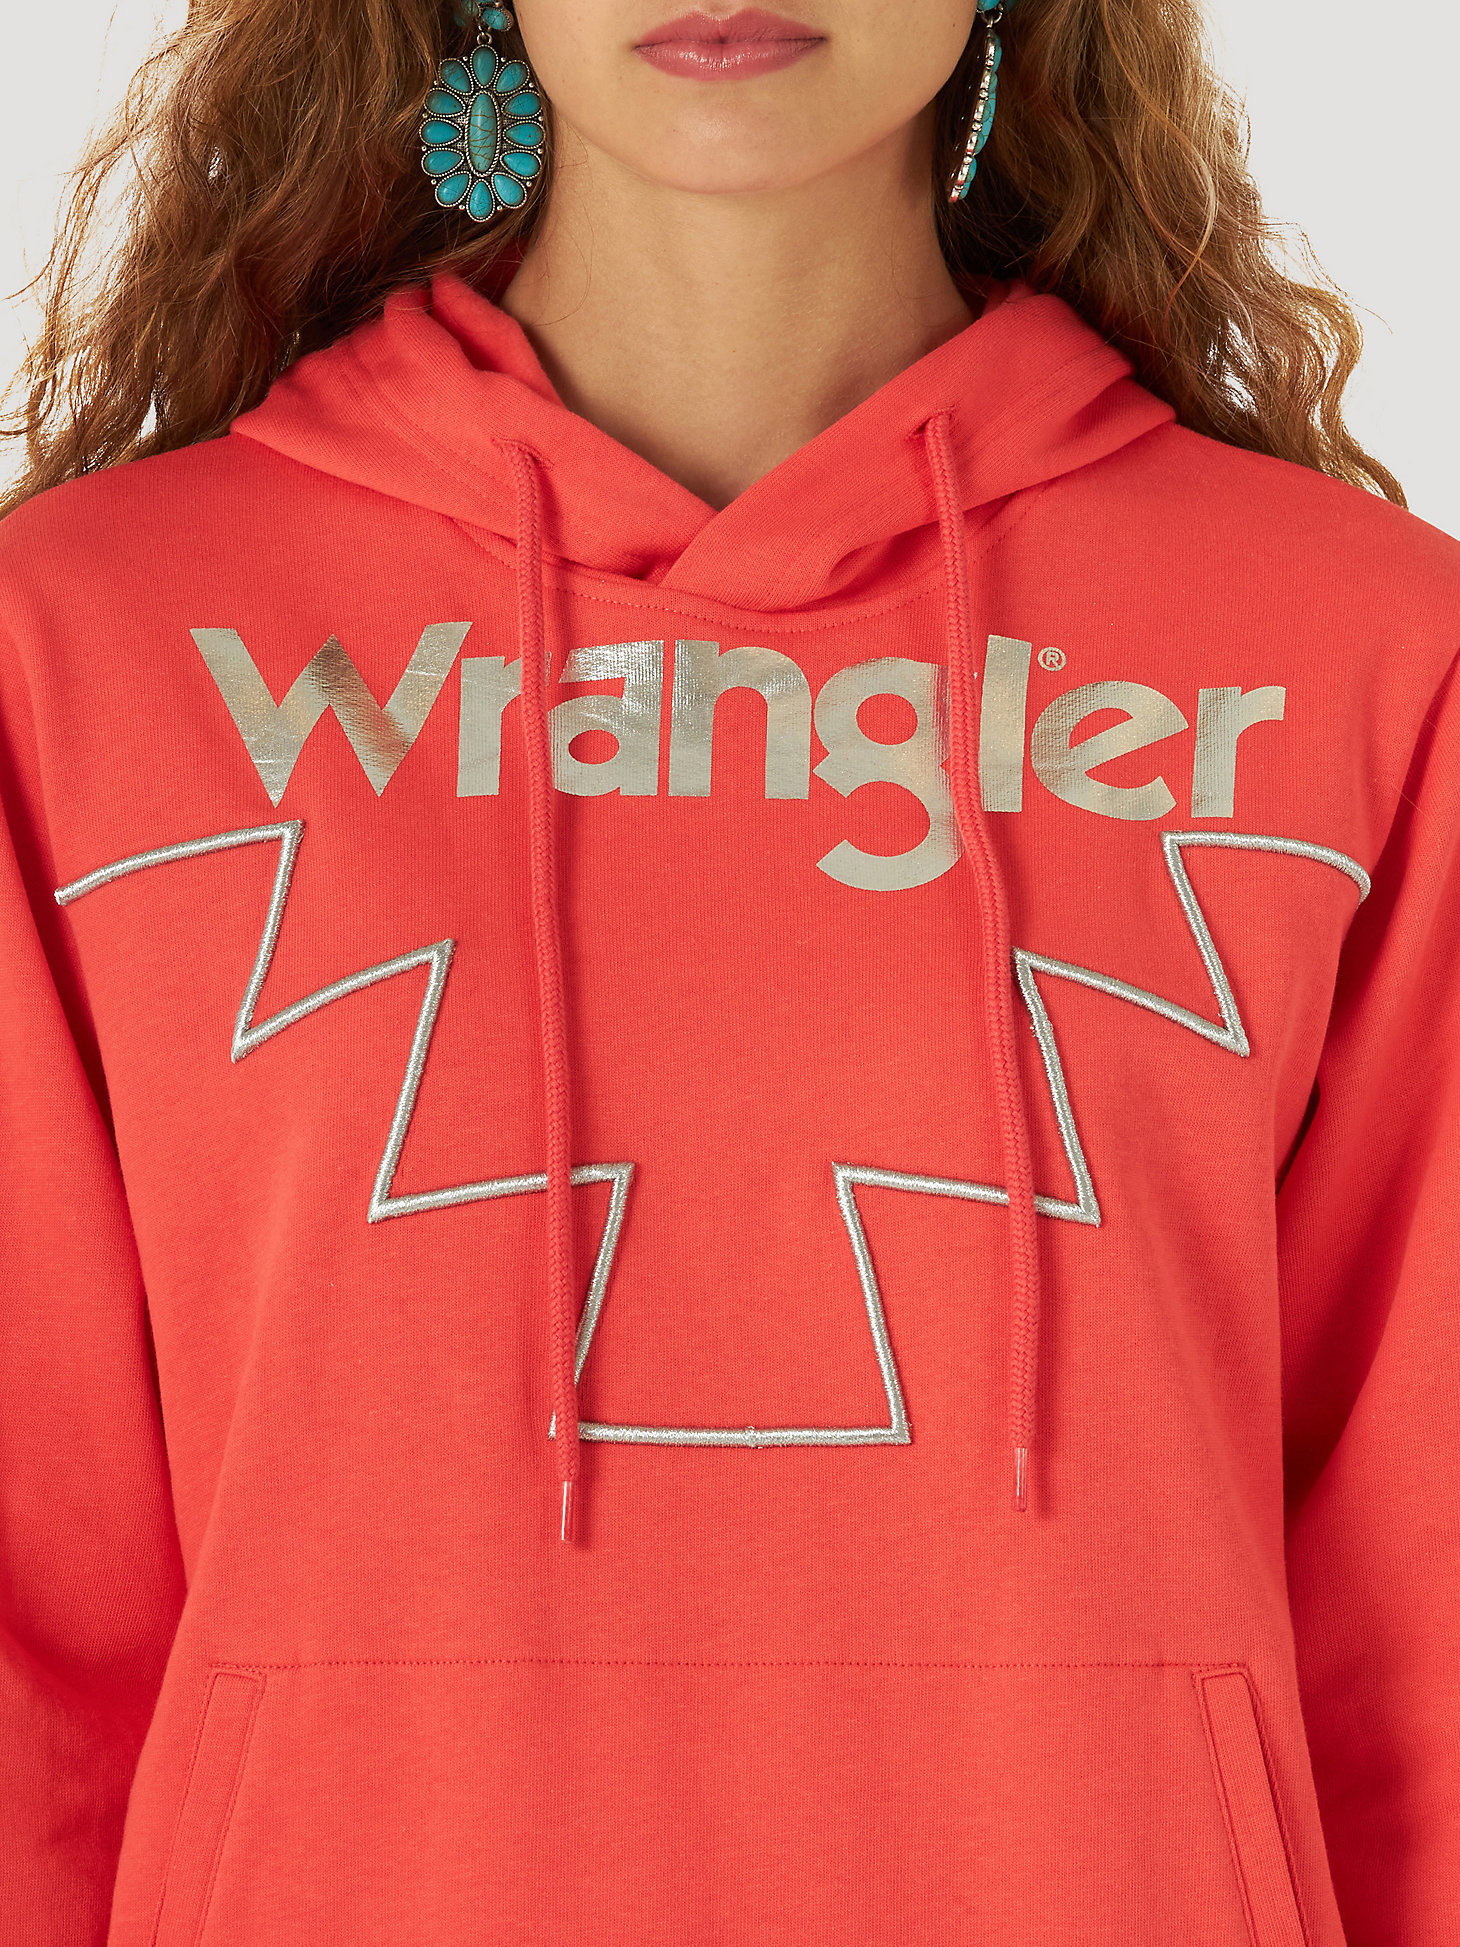 Women's Wrangler Retro® Metallic Logo Pullover Hoodie in pink alternative view 2